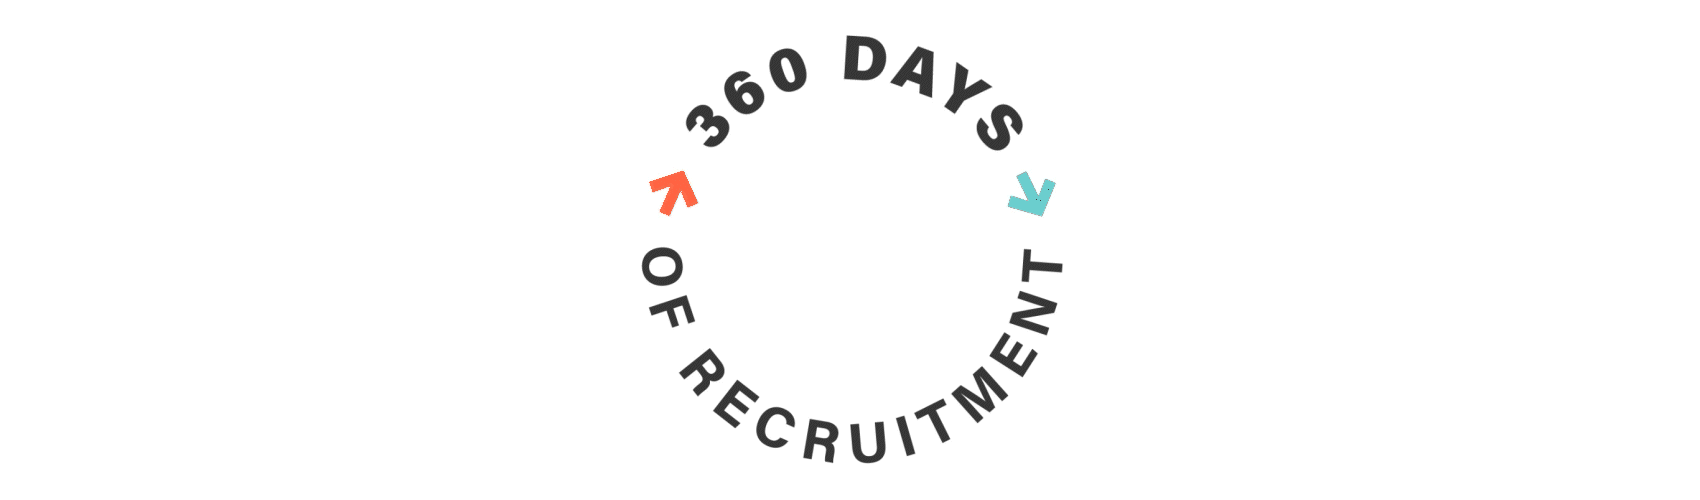 360 days of recruitment - employer branding campaign